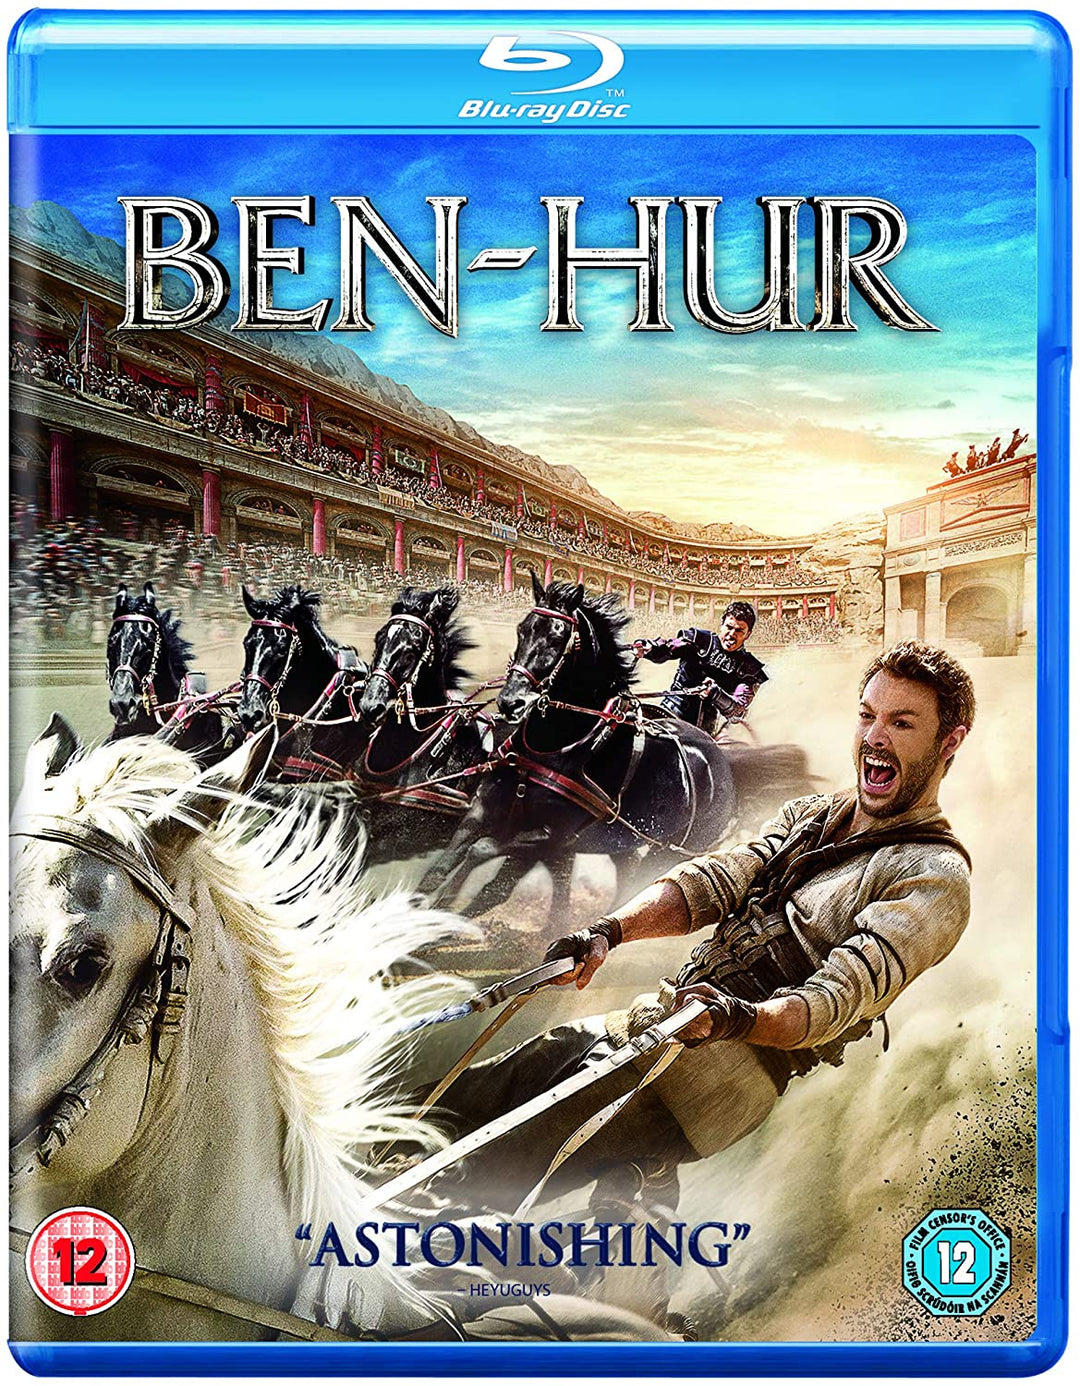 Ben Hur [Blu-ray] [2017] [Region frei]